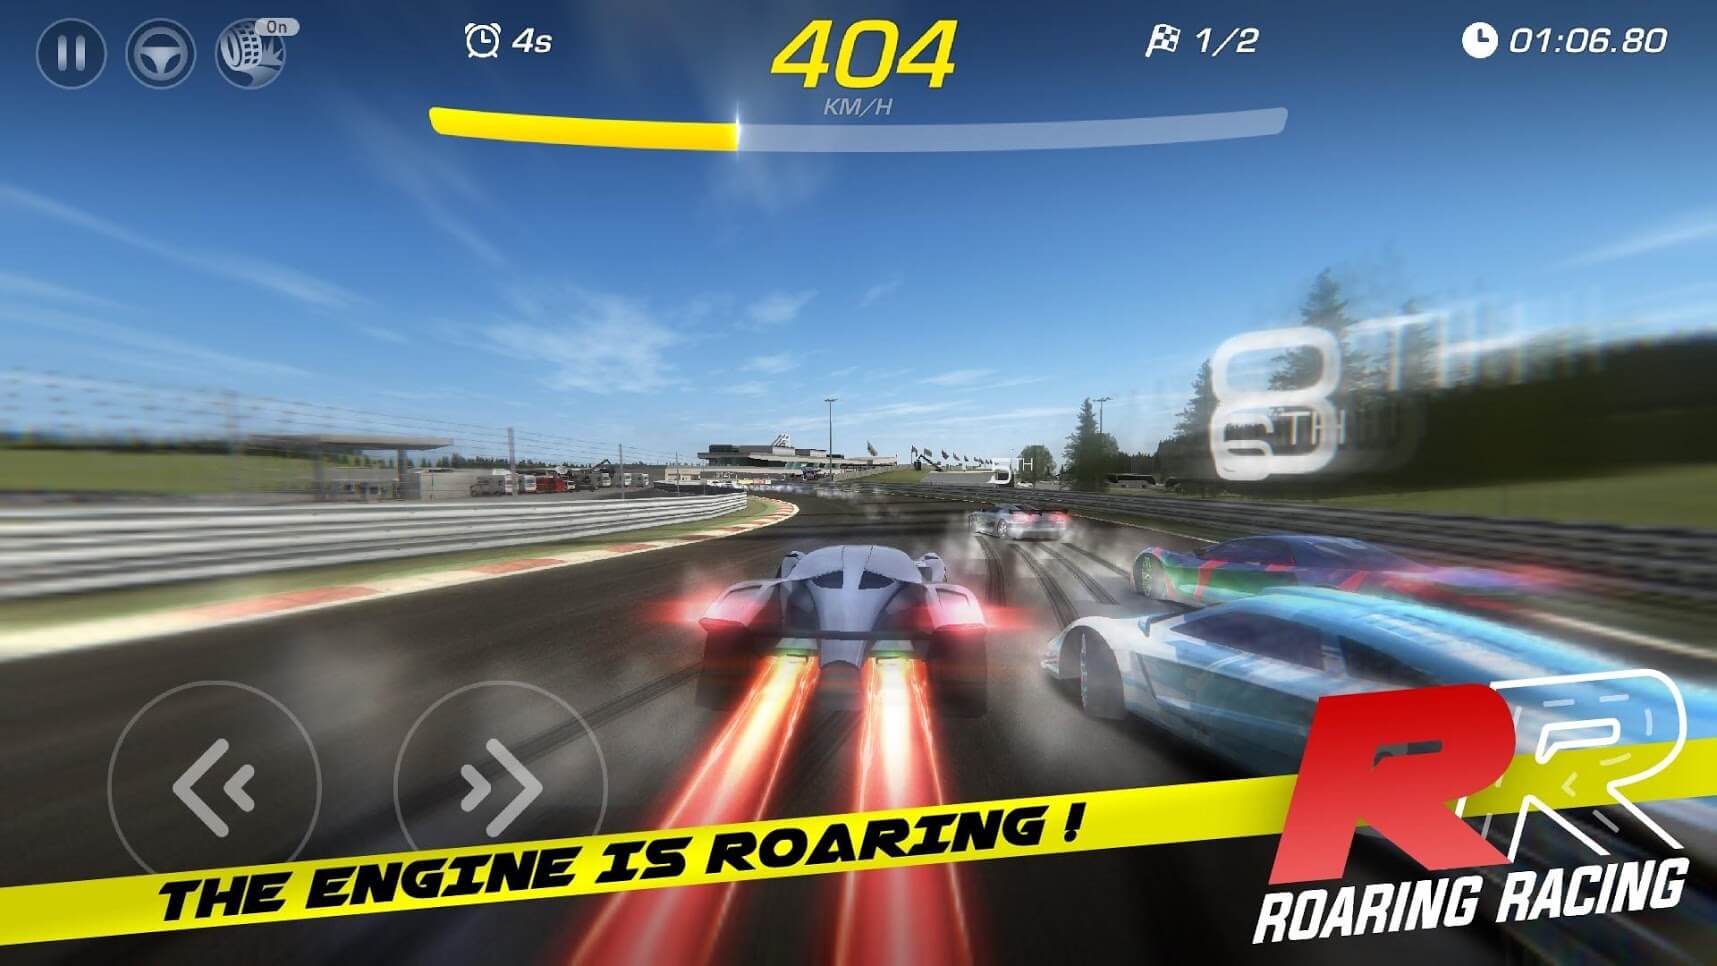 Roaring-Racing-4.jpg